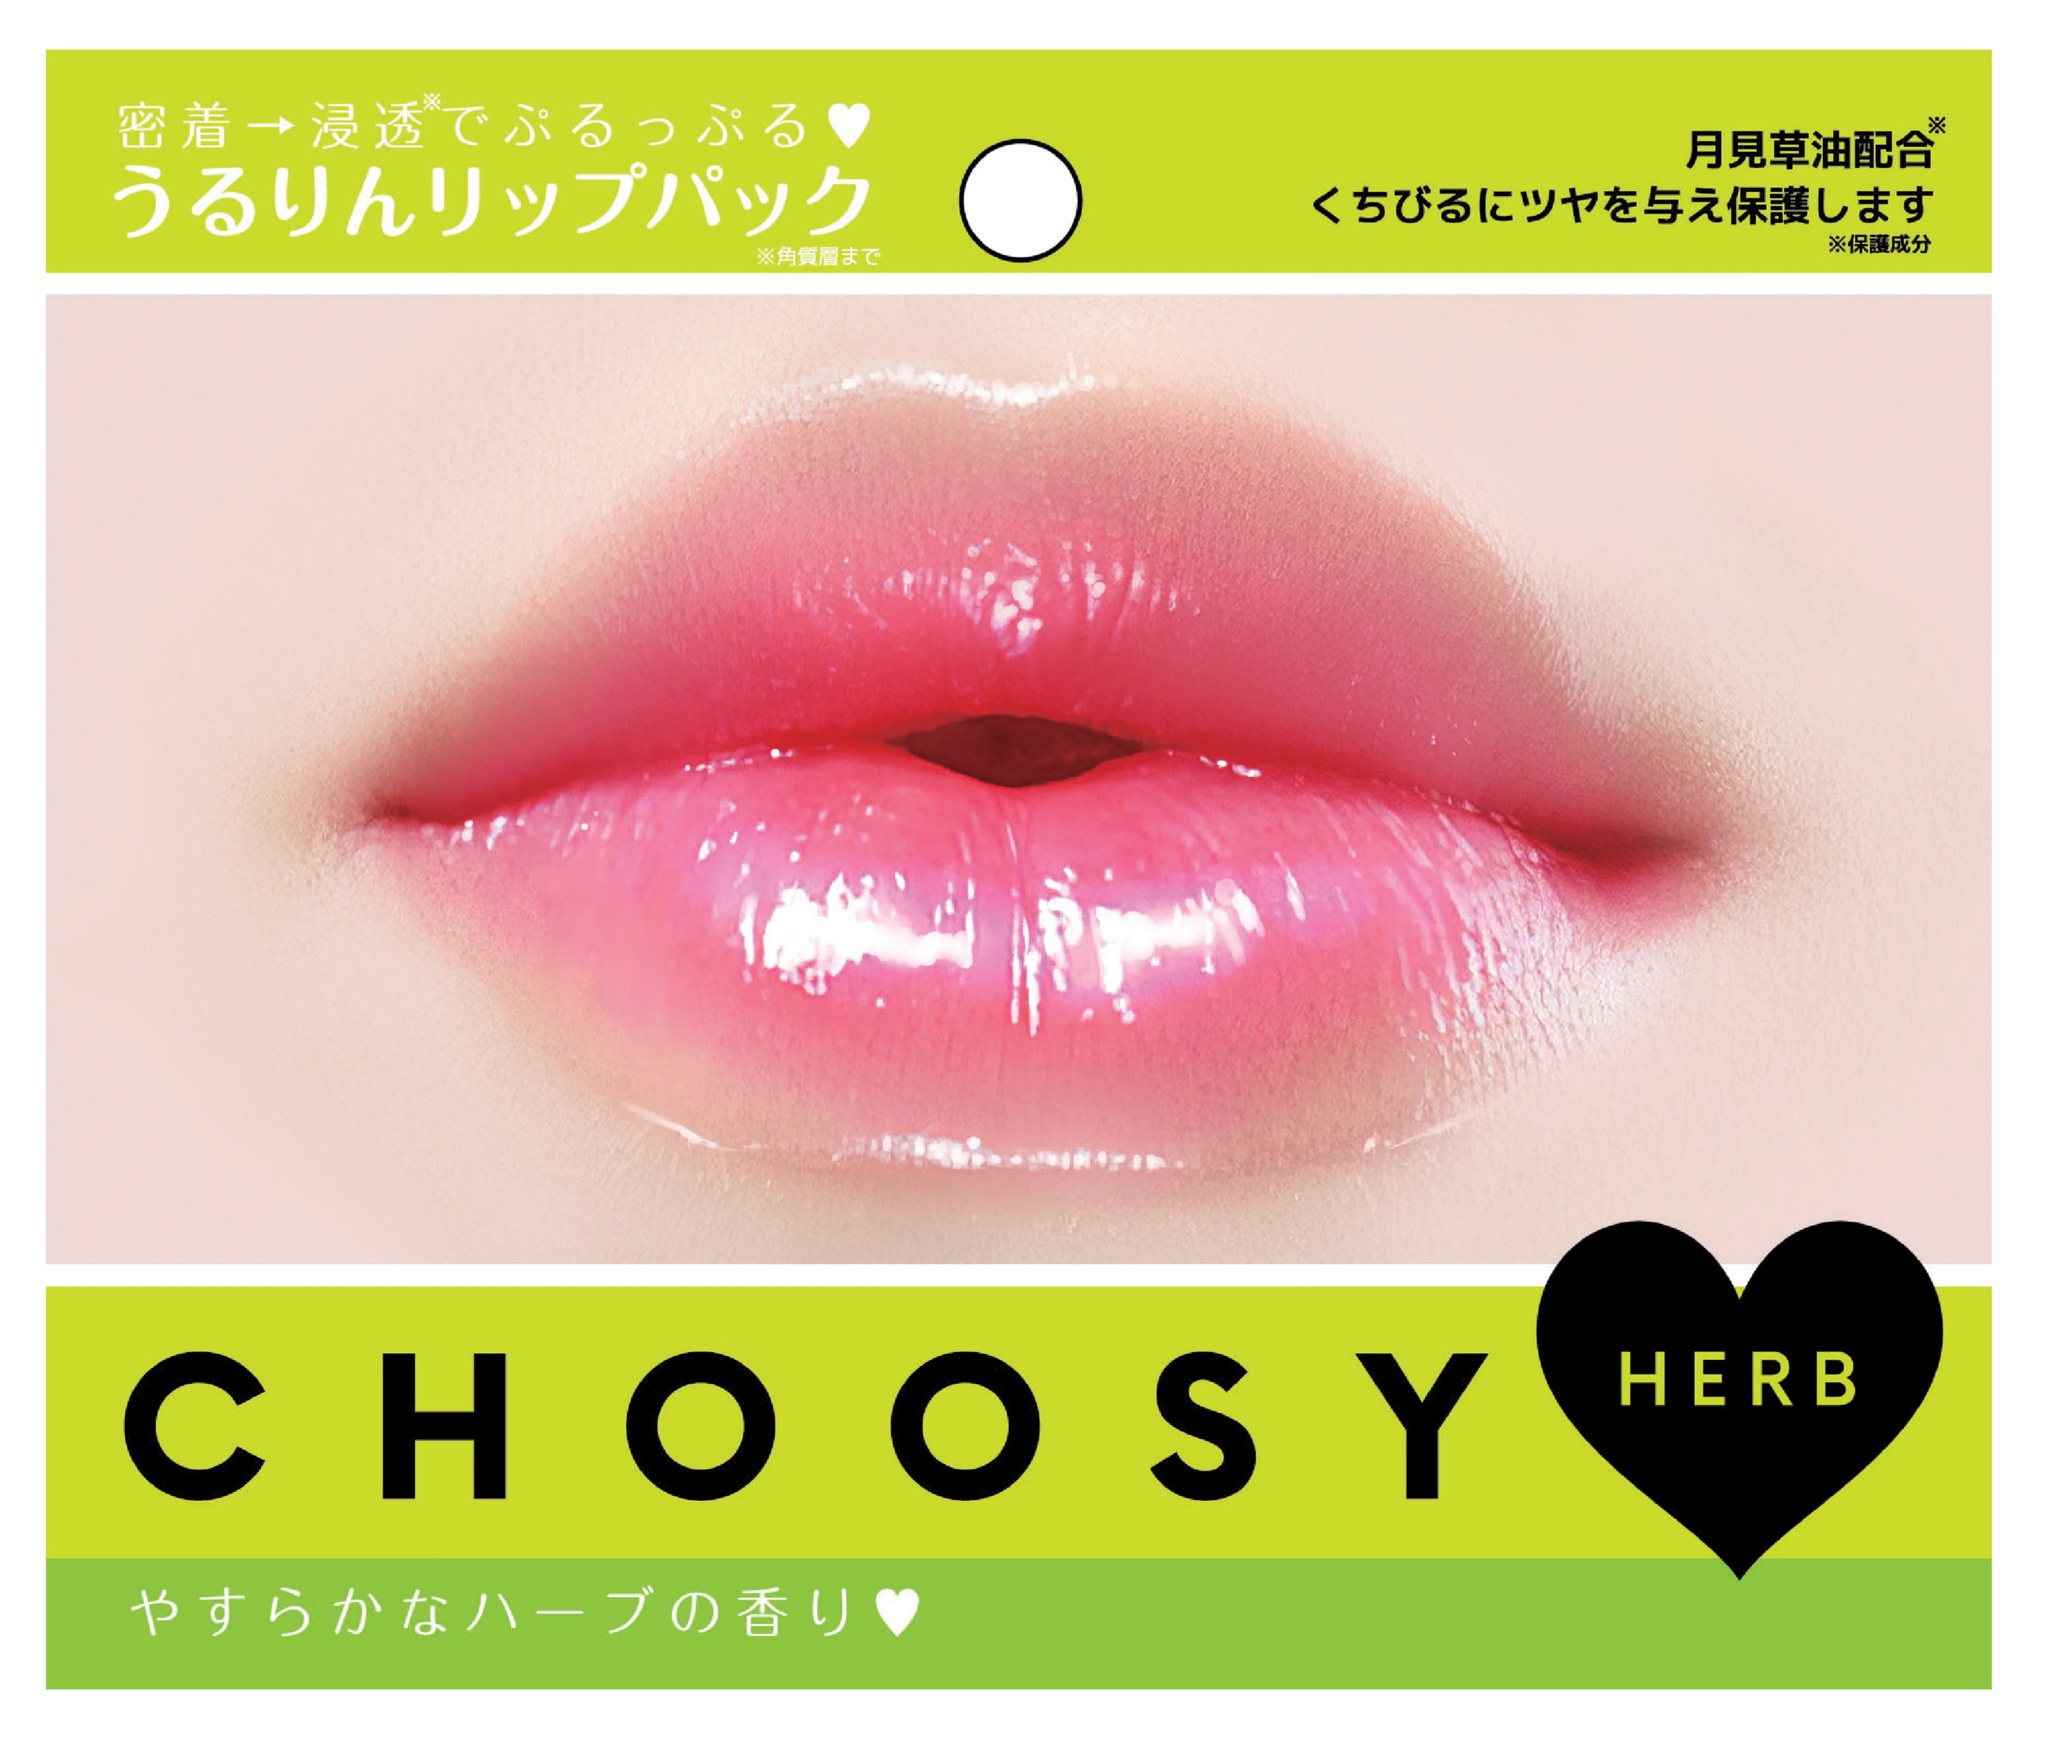 Choosy Lip Pack